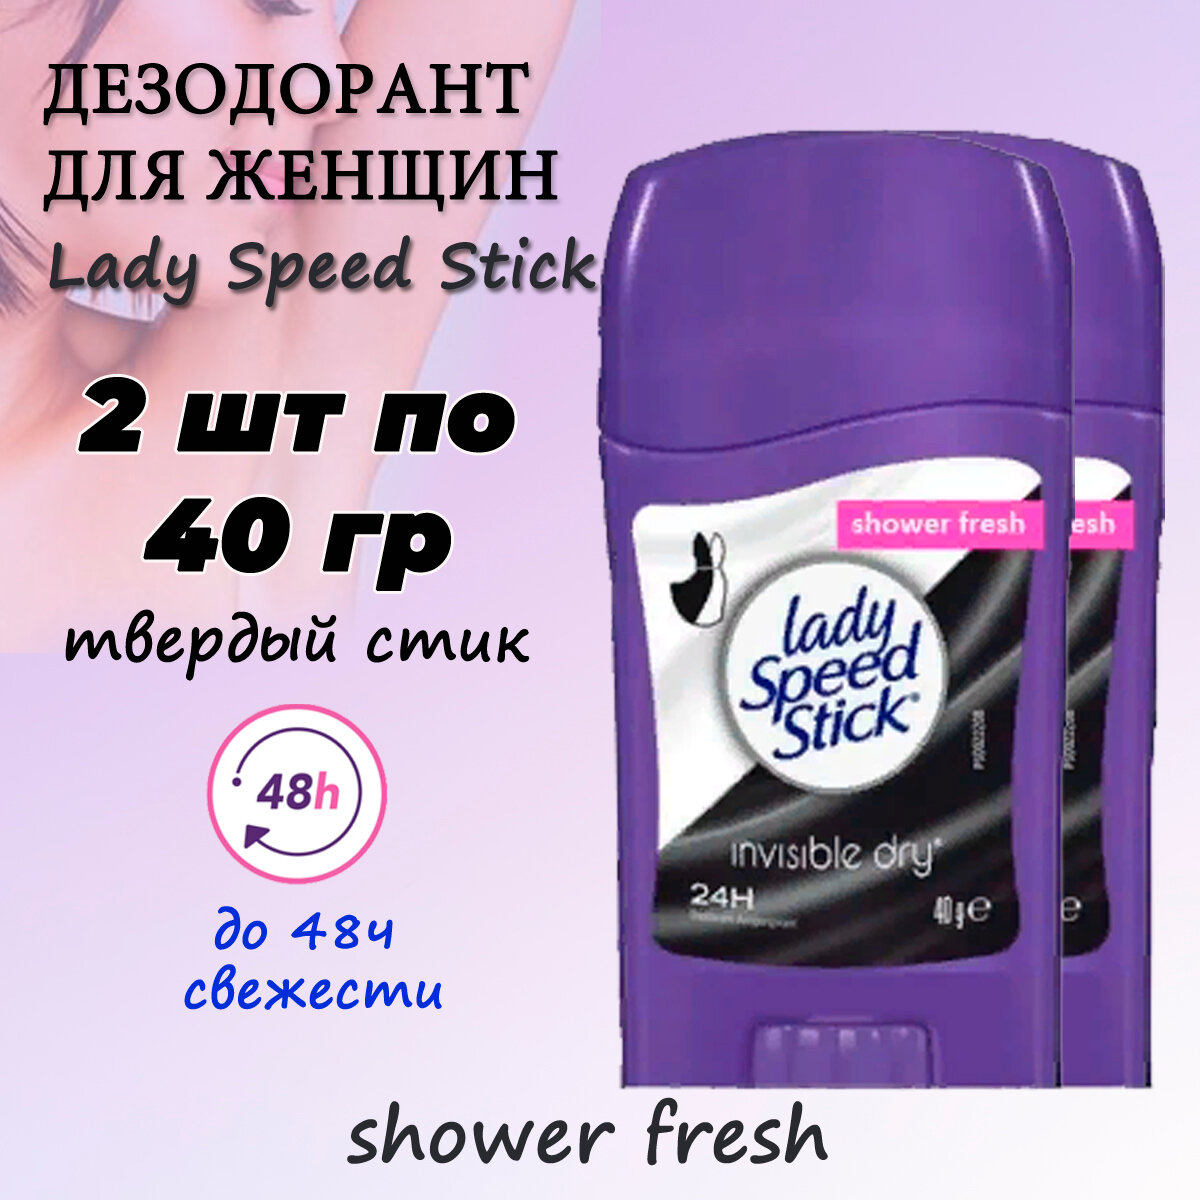 Дезодорант Lady Speed Stick Inv Dry - Shower Fresh твердый стик 2 шт по 40гр